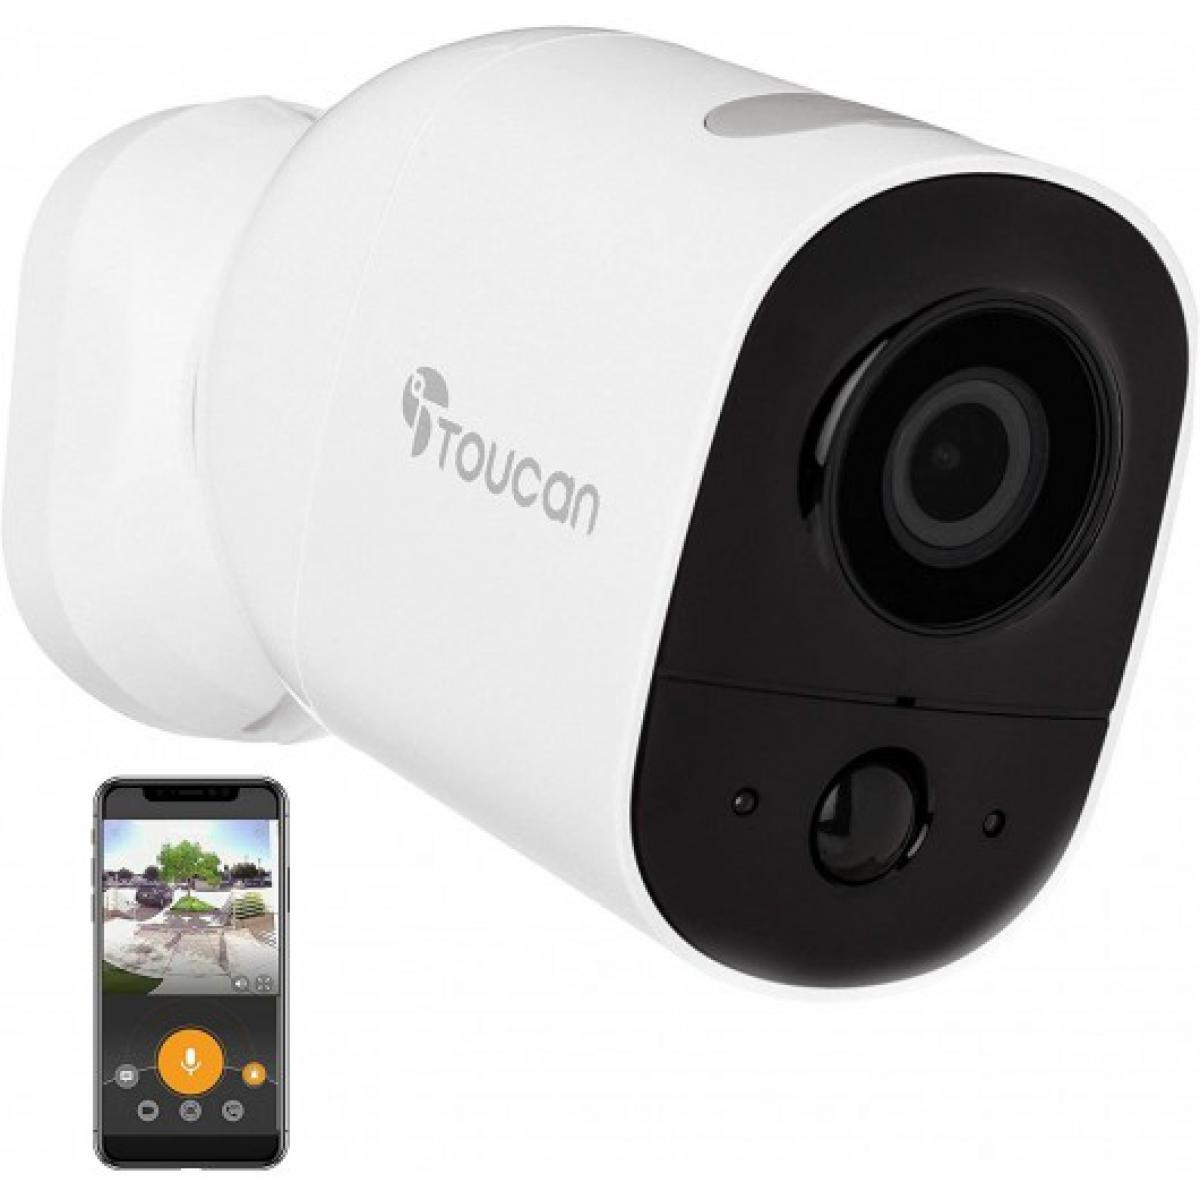 Toucan - Toucan Wireless Outdoor Camera, la caméra multifonction - Caméra de surveillance connectée